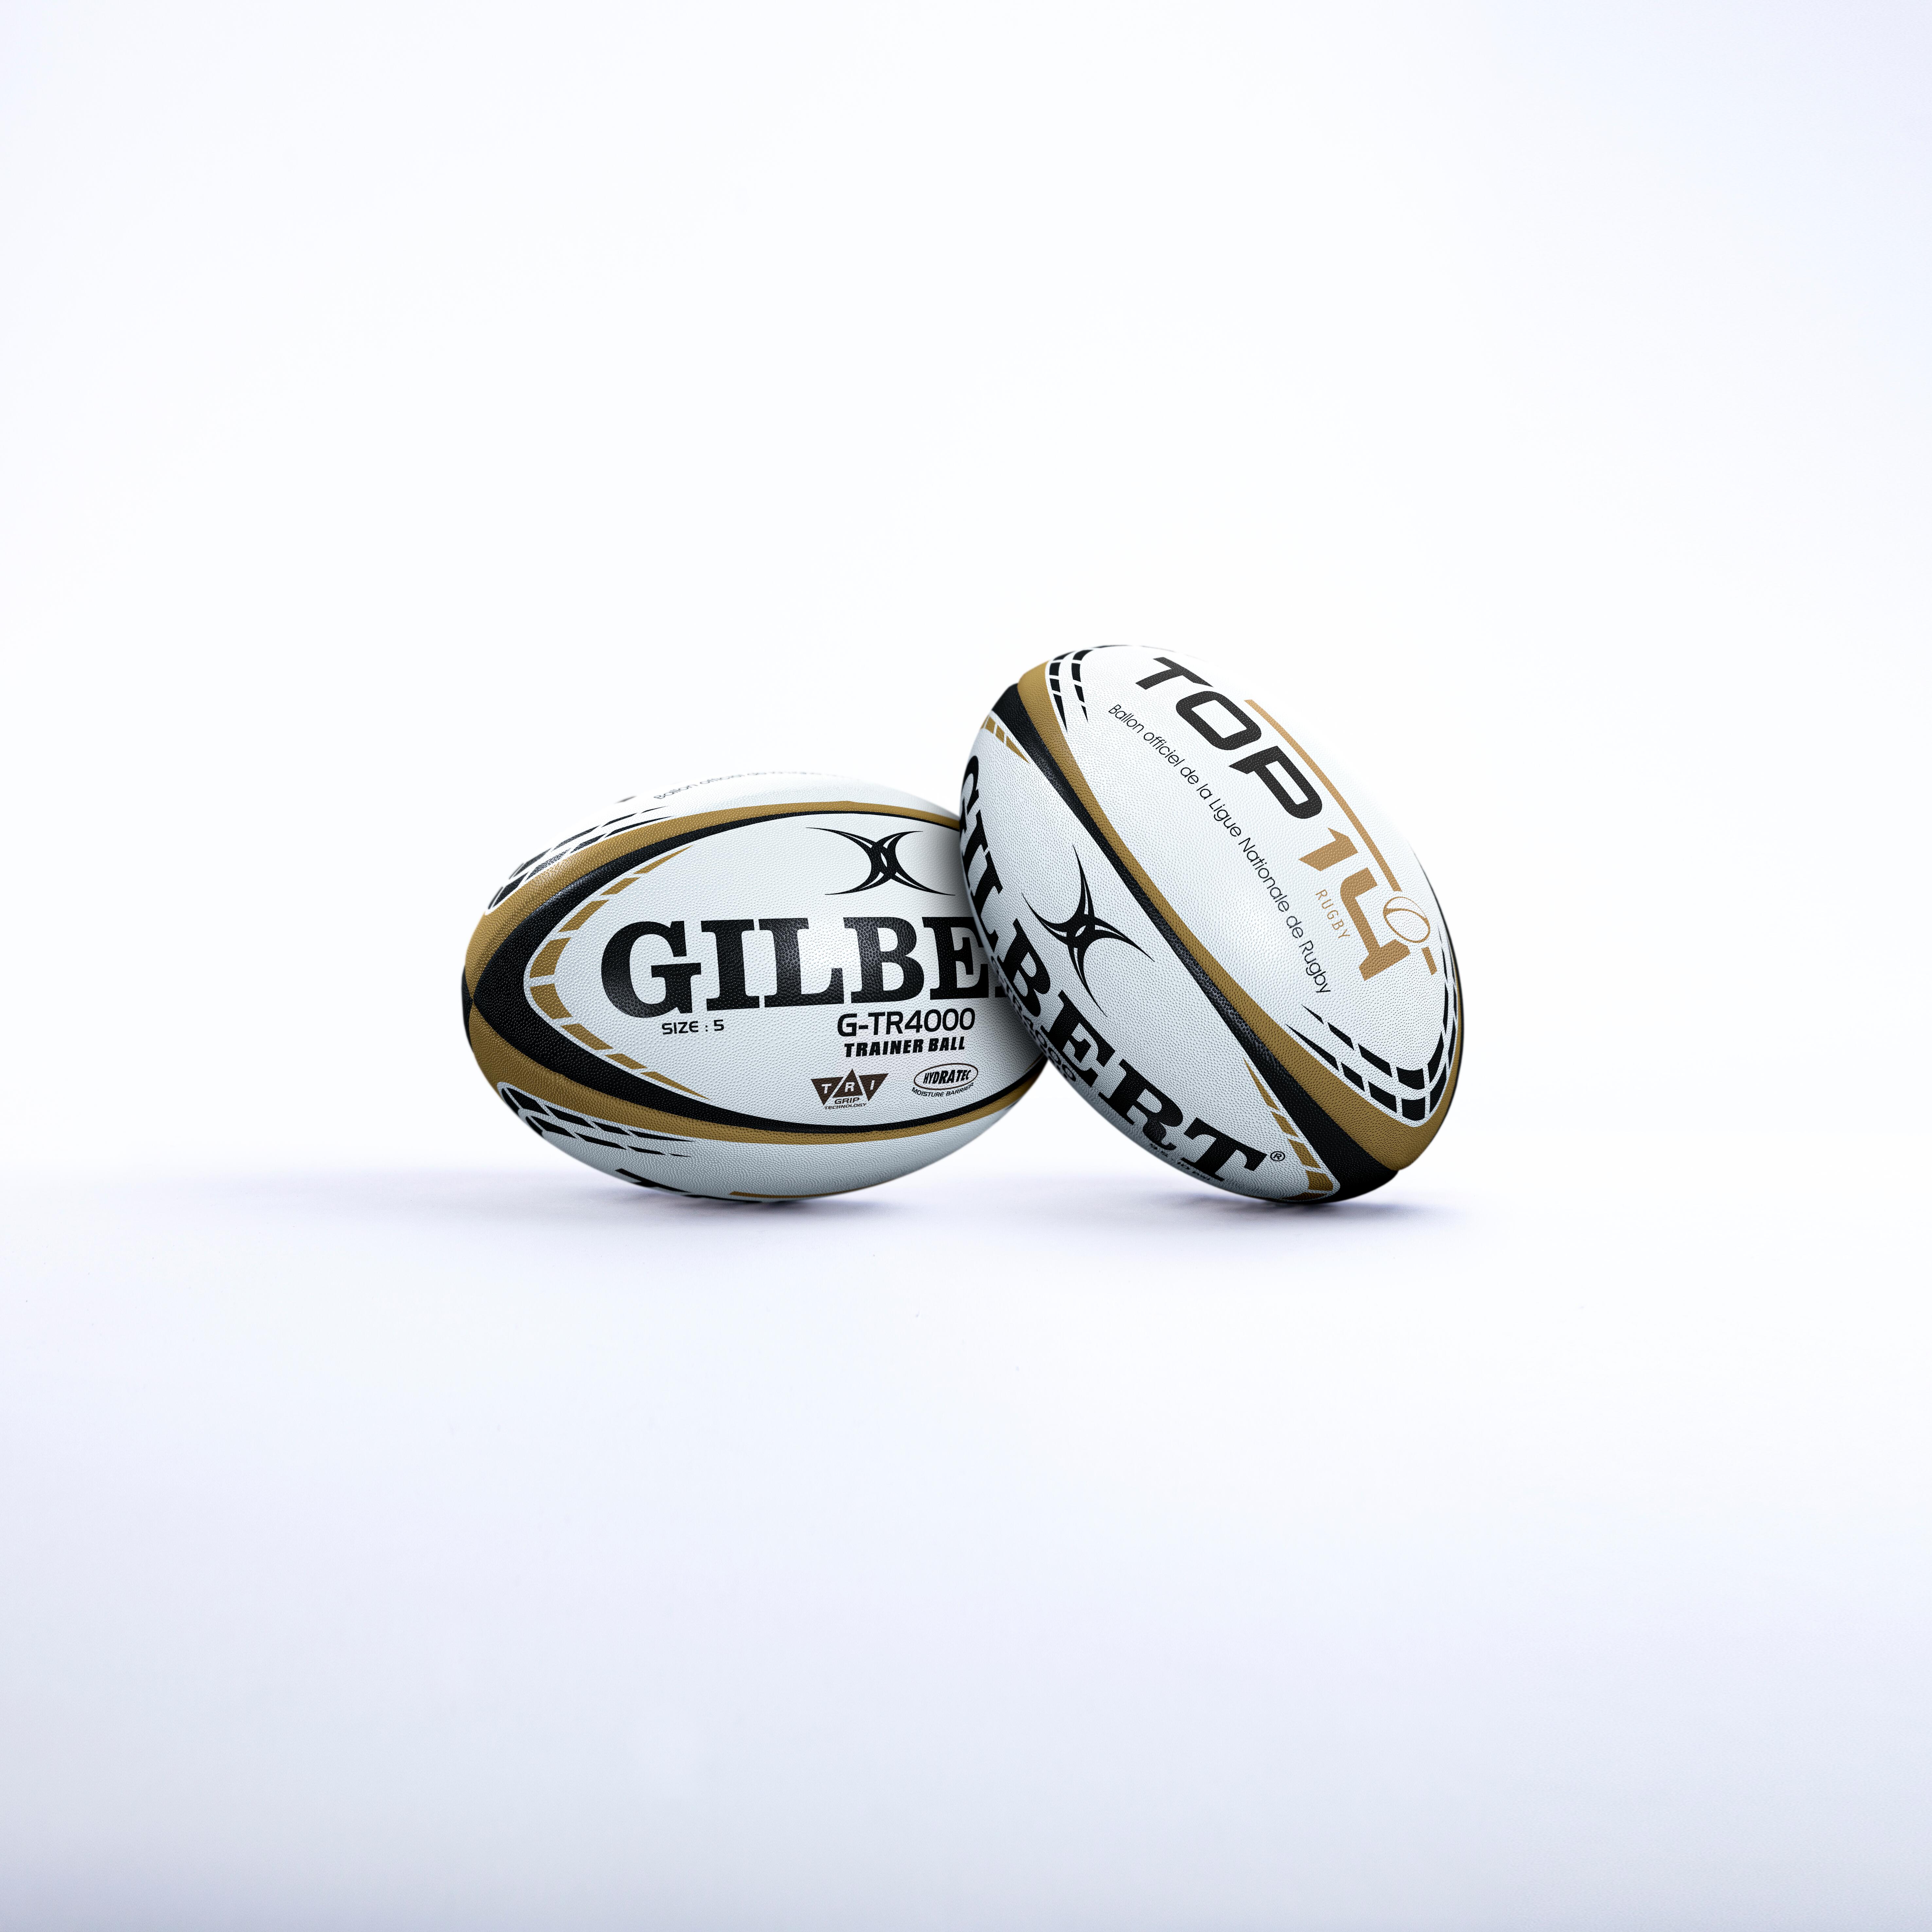 Minge Rugby GILBERT TOP 14 mărimea 5 alb-auriu La Oferta Online decathlon imagine La Oferta Online